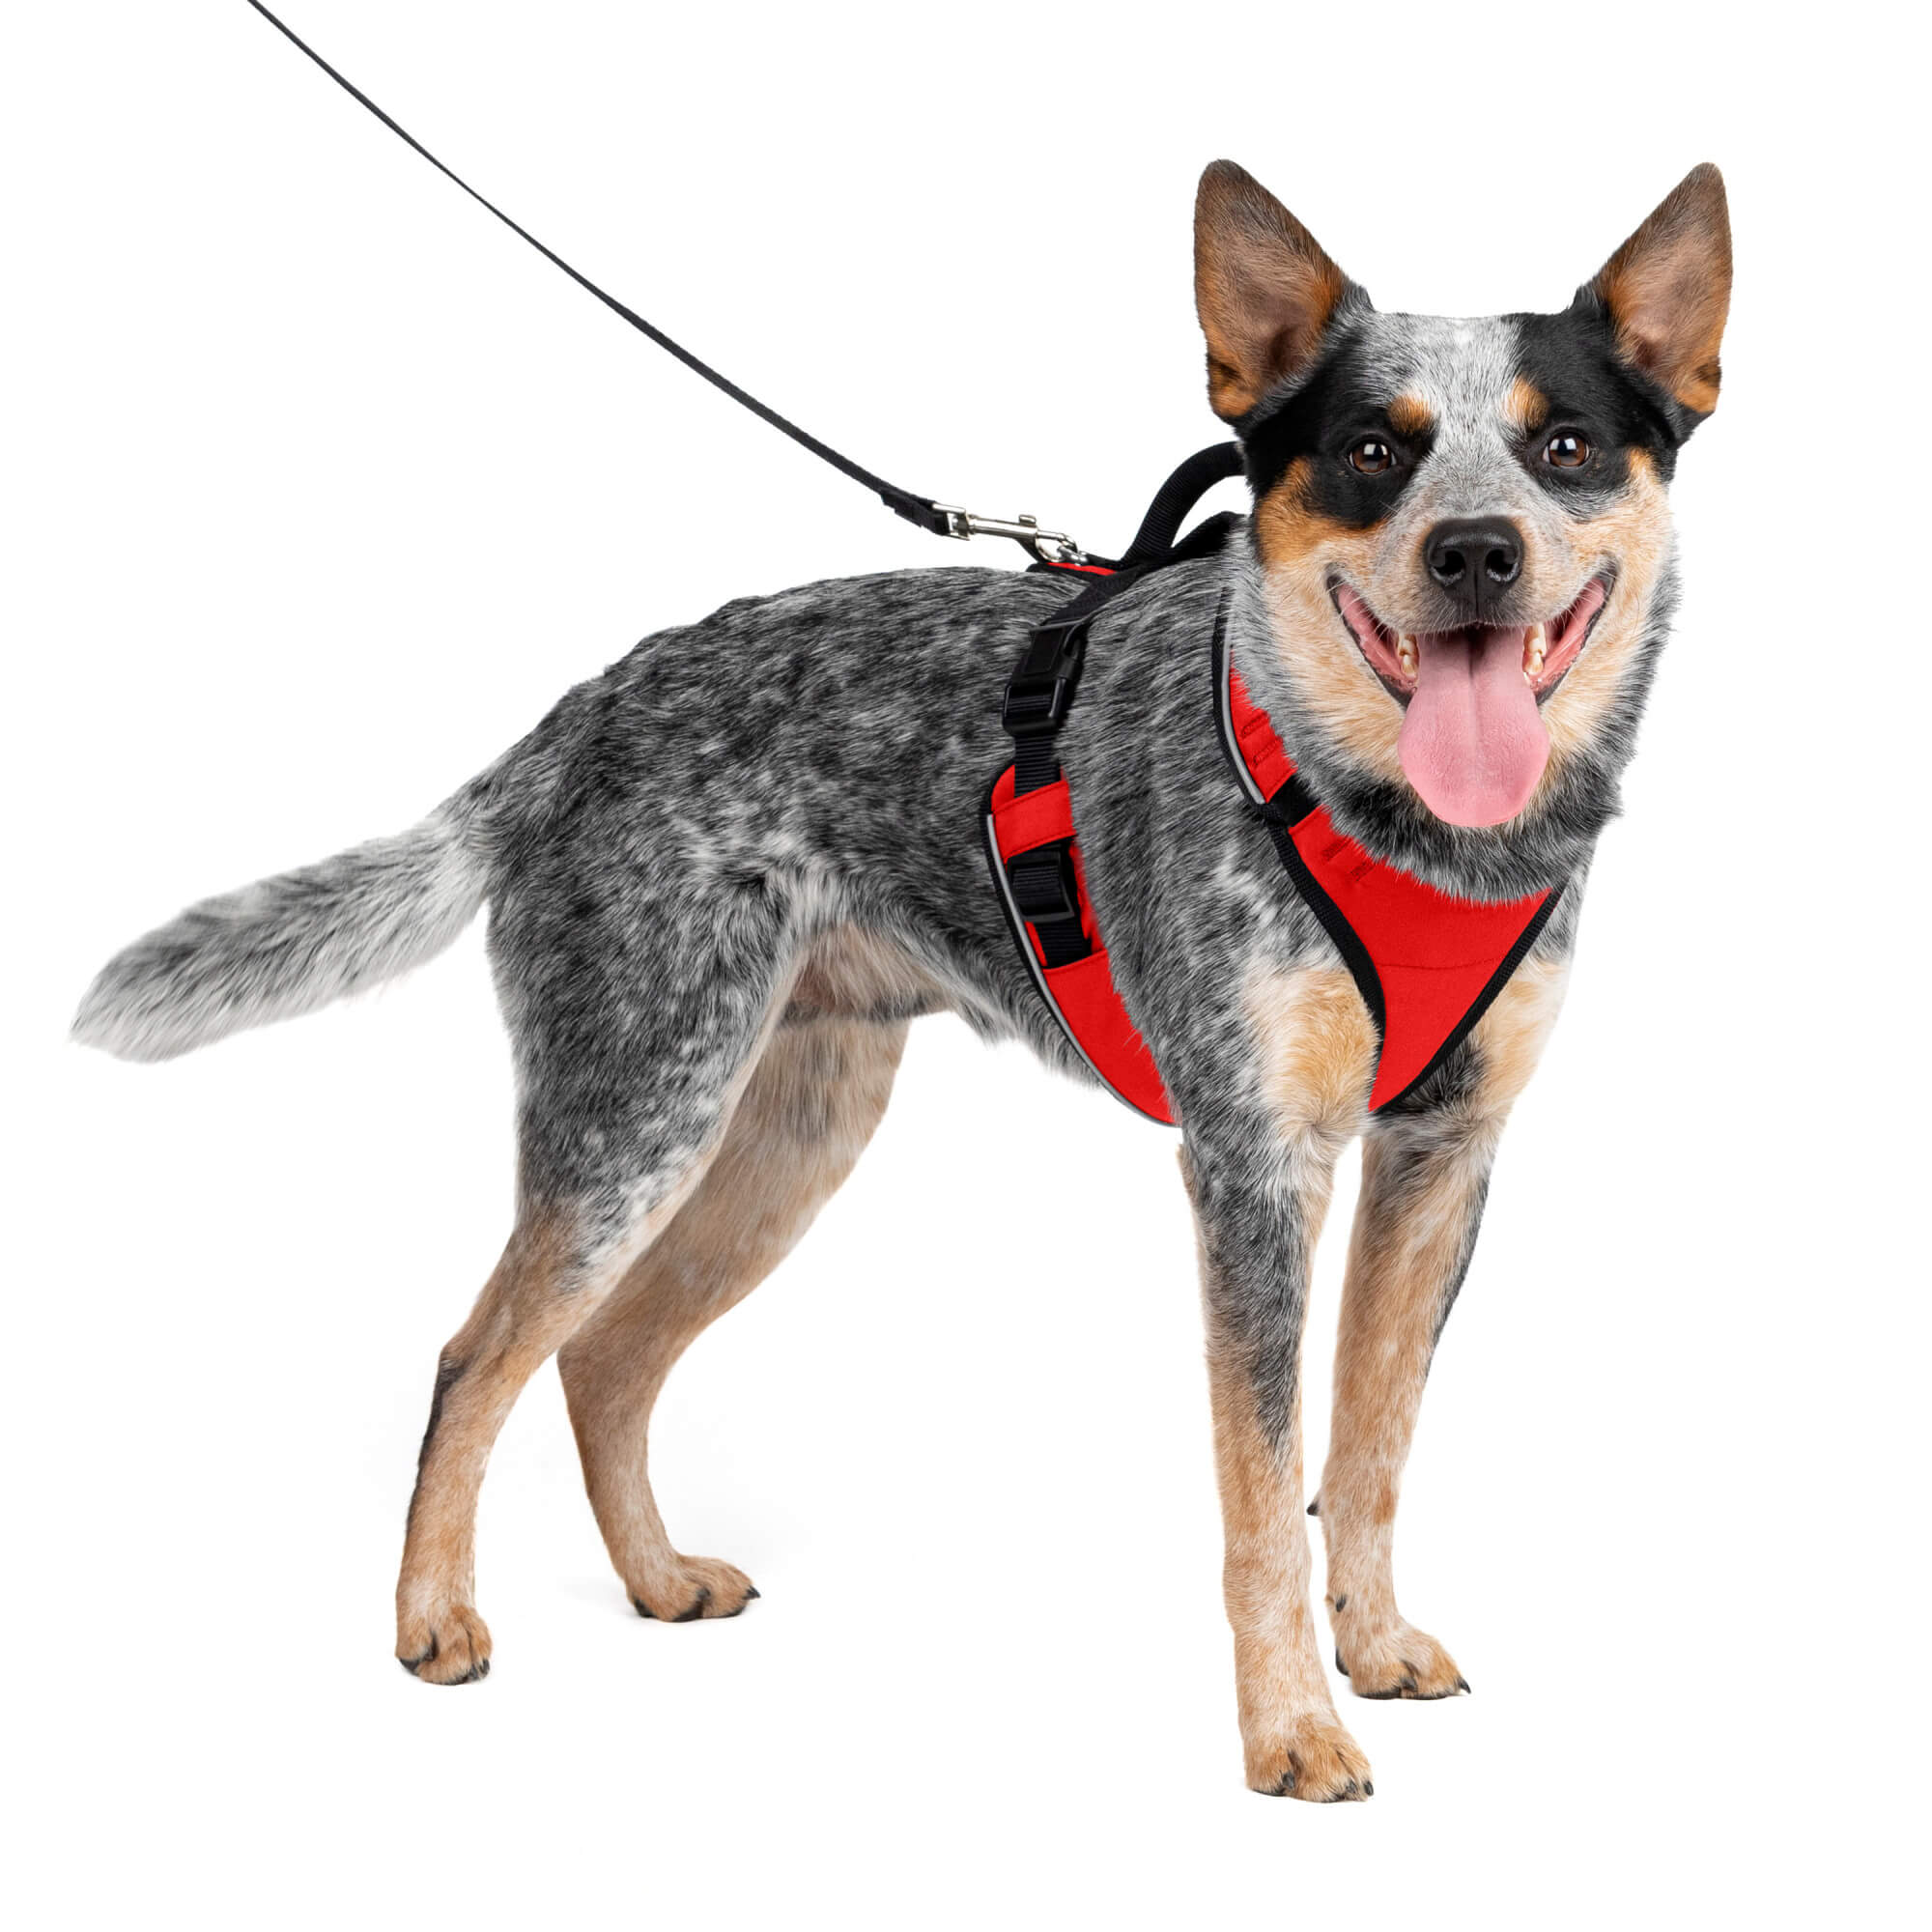 Dog wearing red petsafe easysport harness in medium